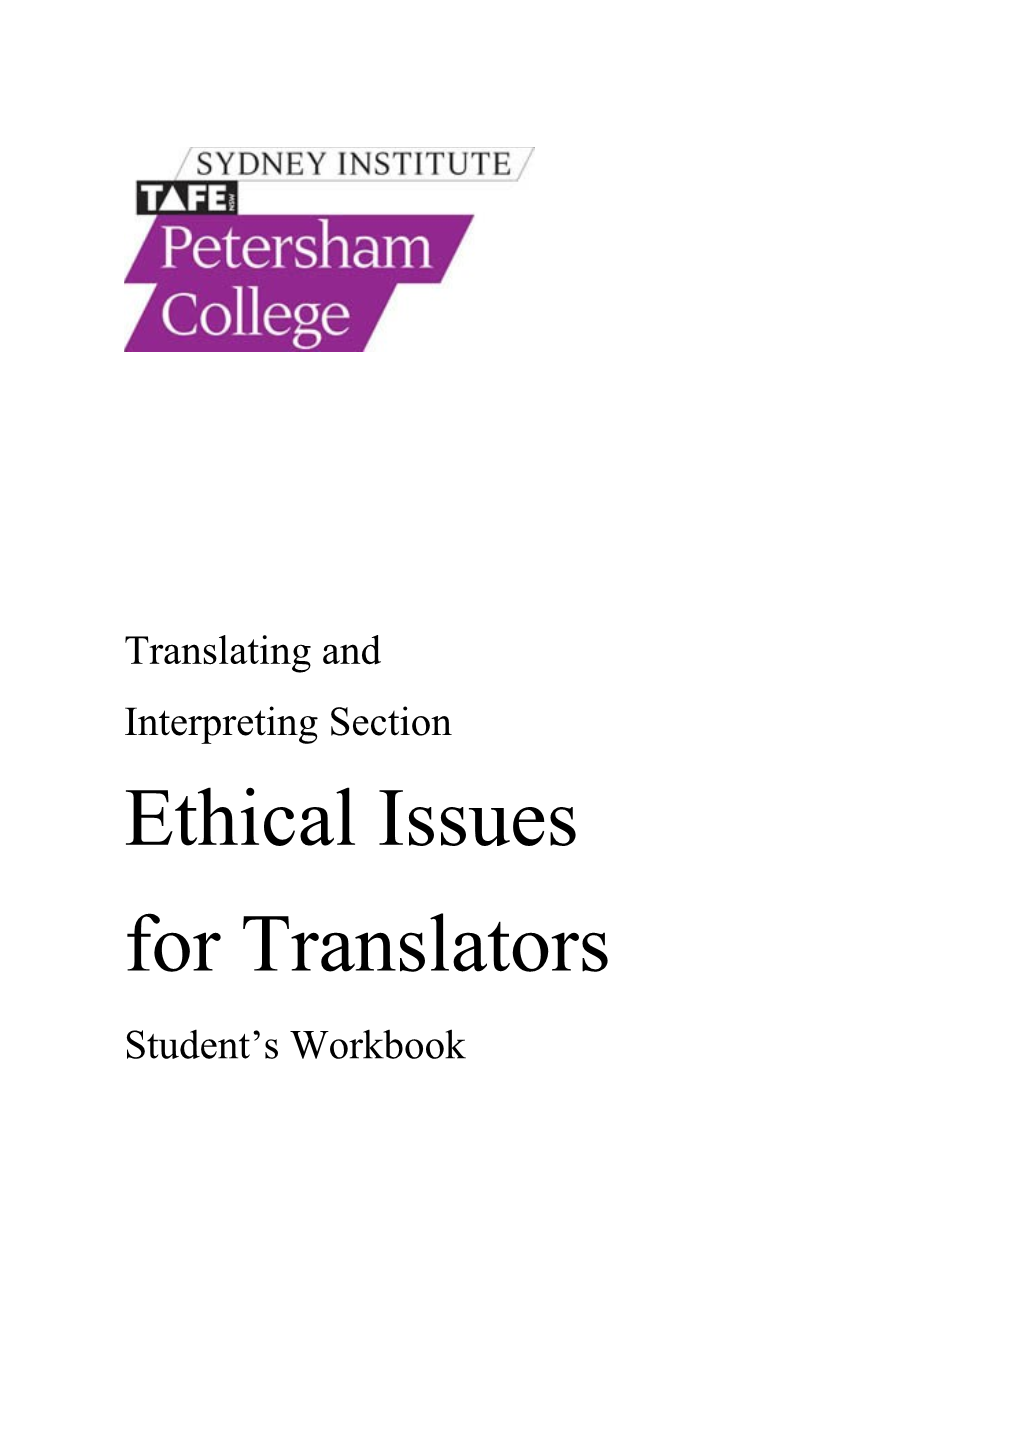 Draft Question for Translation Ethics Workbook